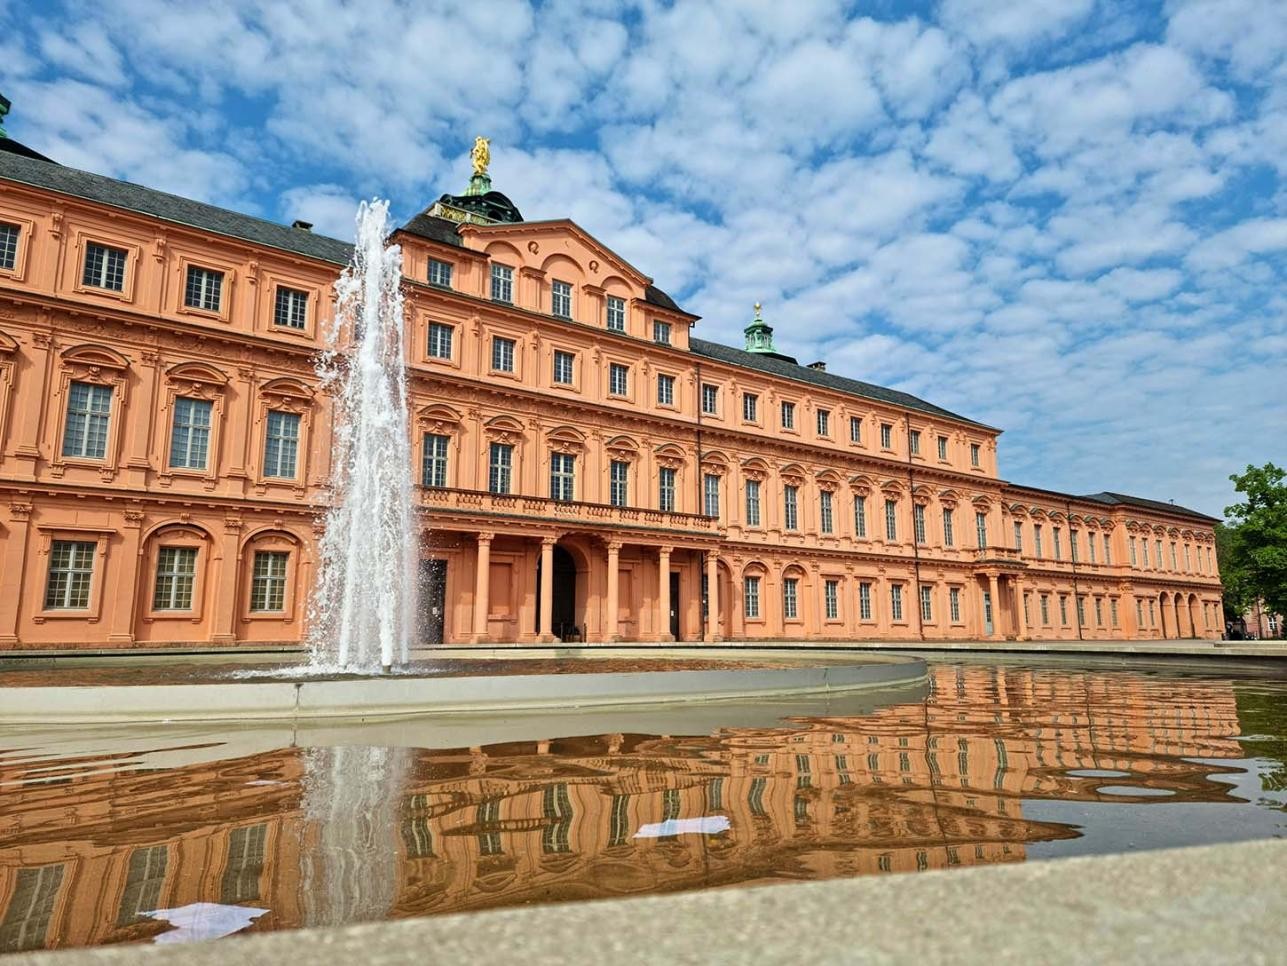 Fountain in front of Rastatt Palace